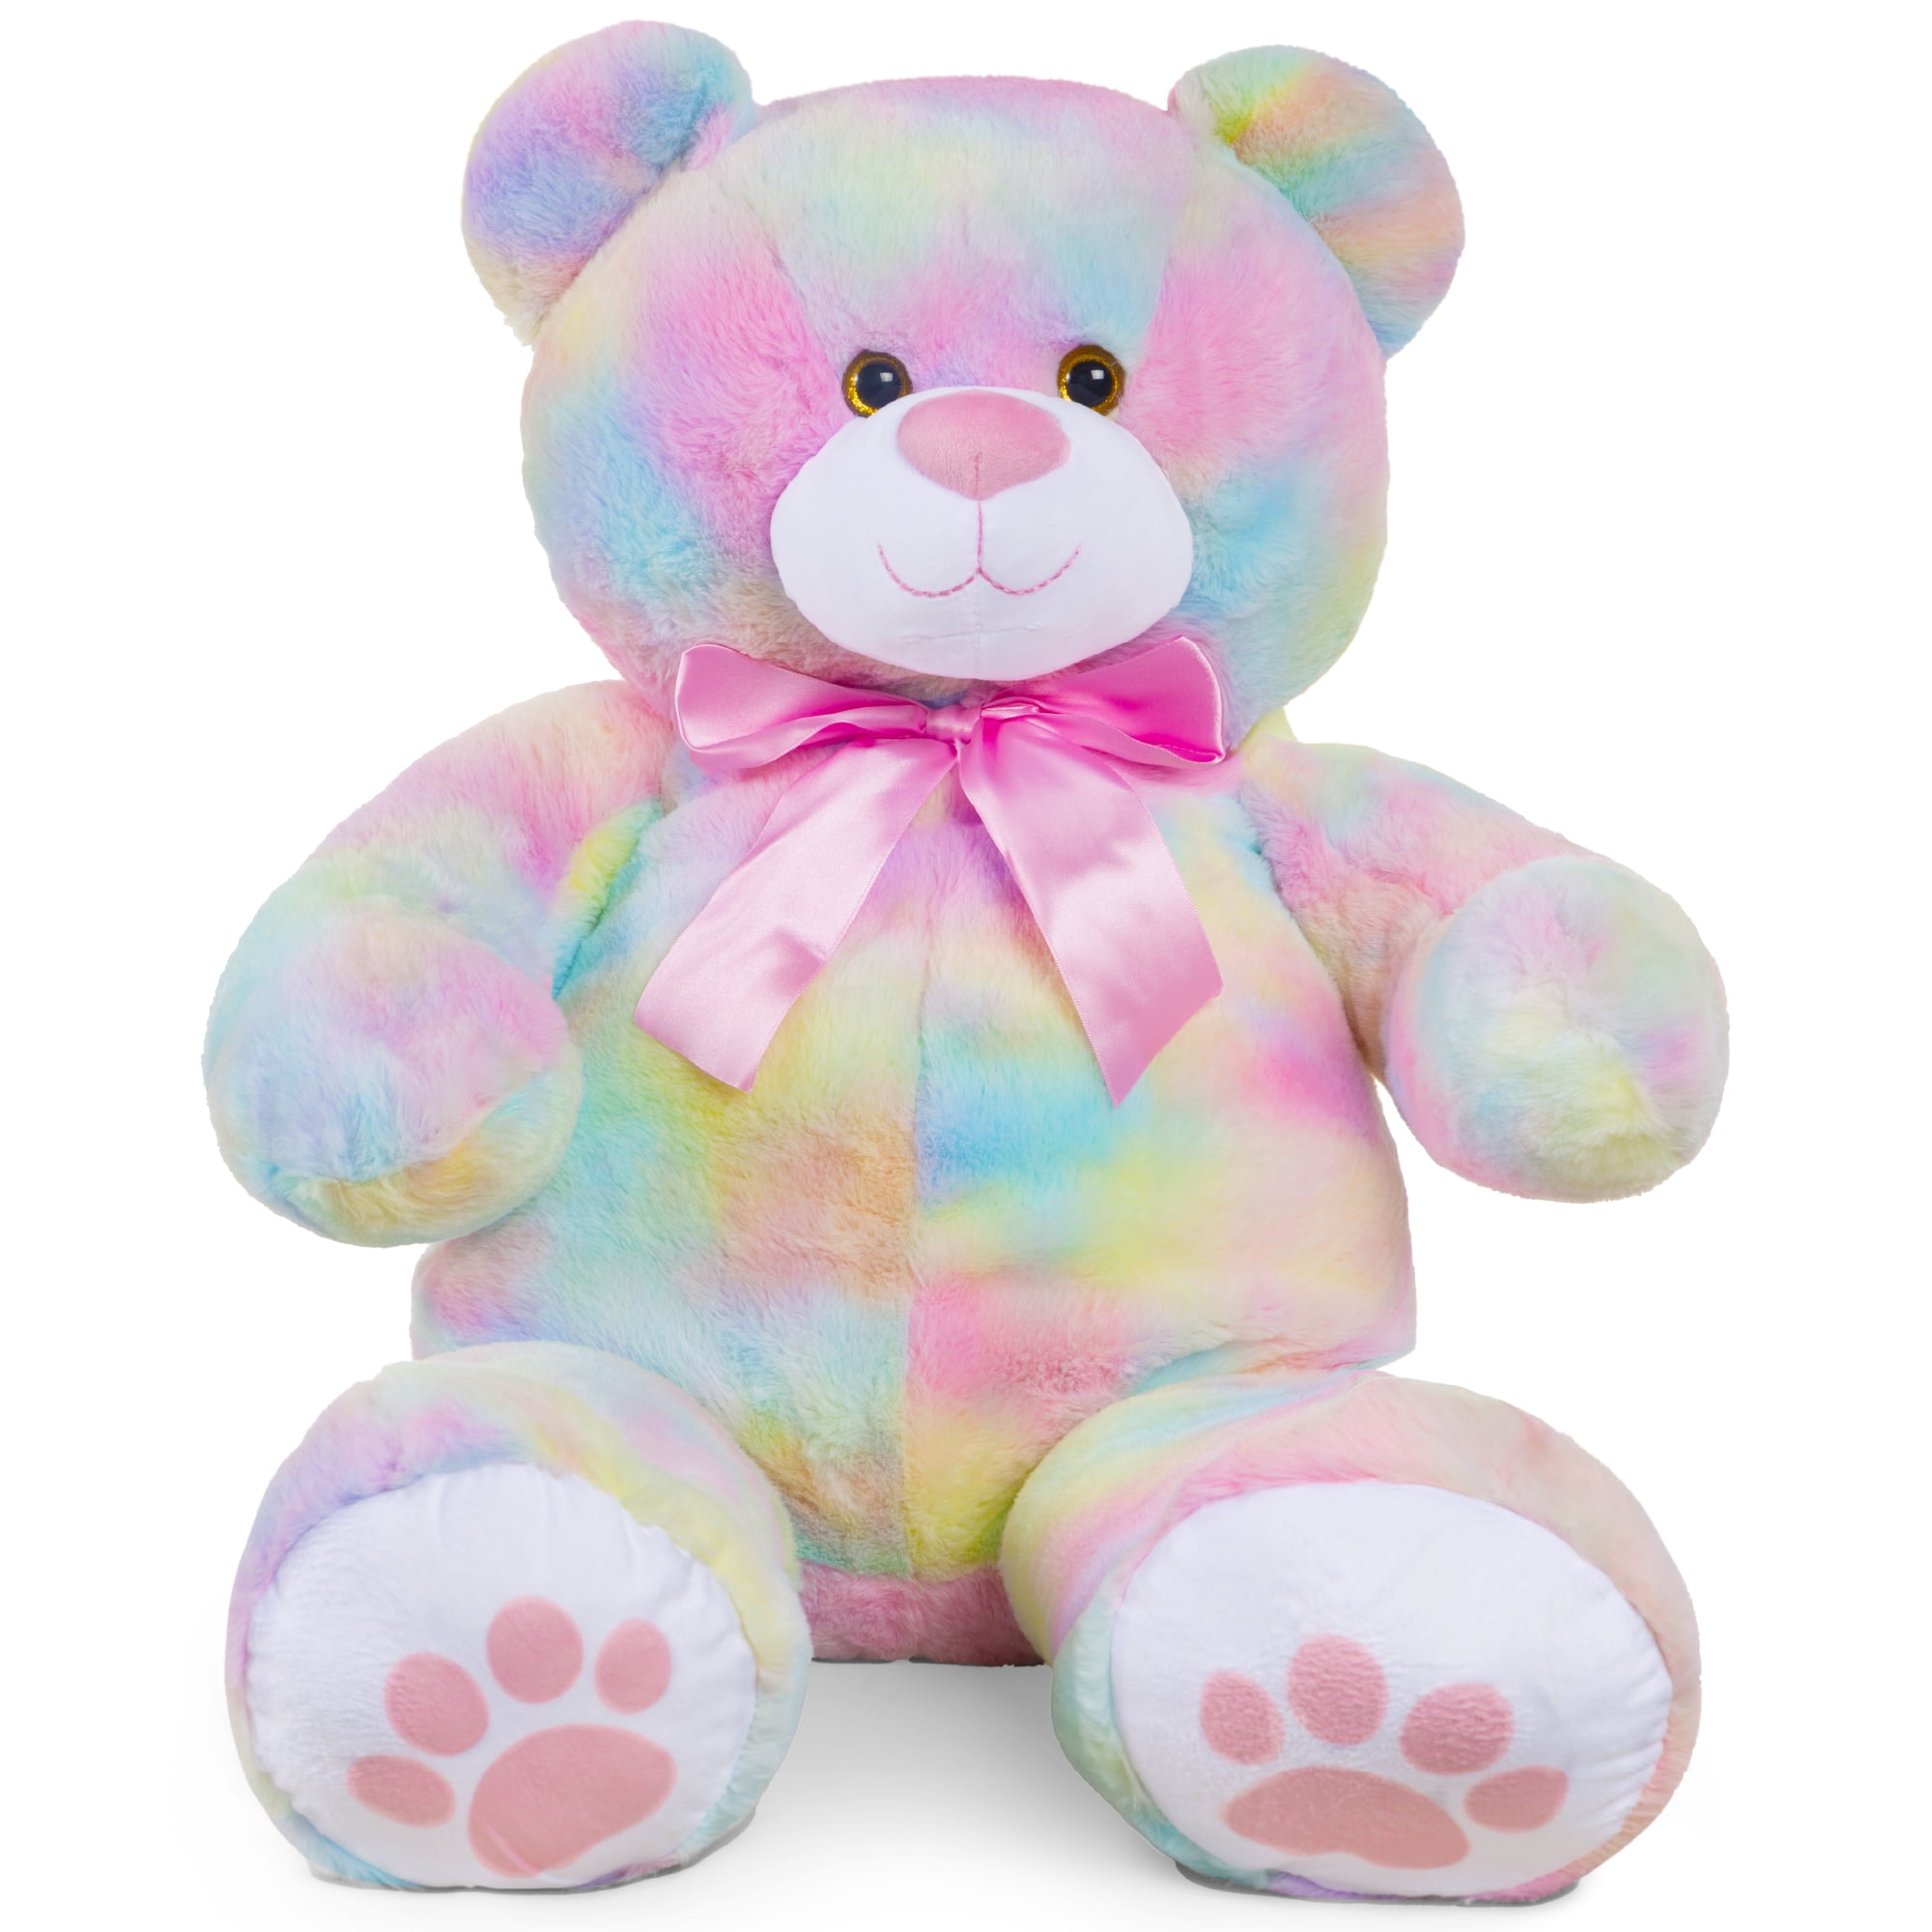 Giant Big Teddy Bear Plush Toy Baby Soft Toys Stuffed Animals Doll Birthday Gift 